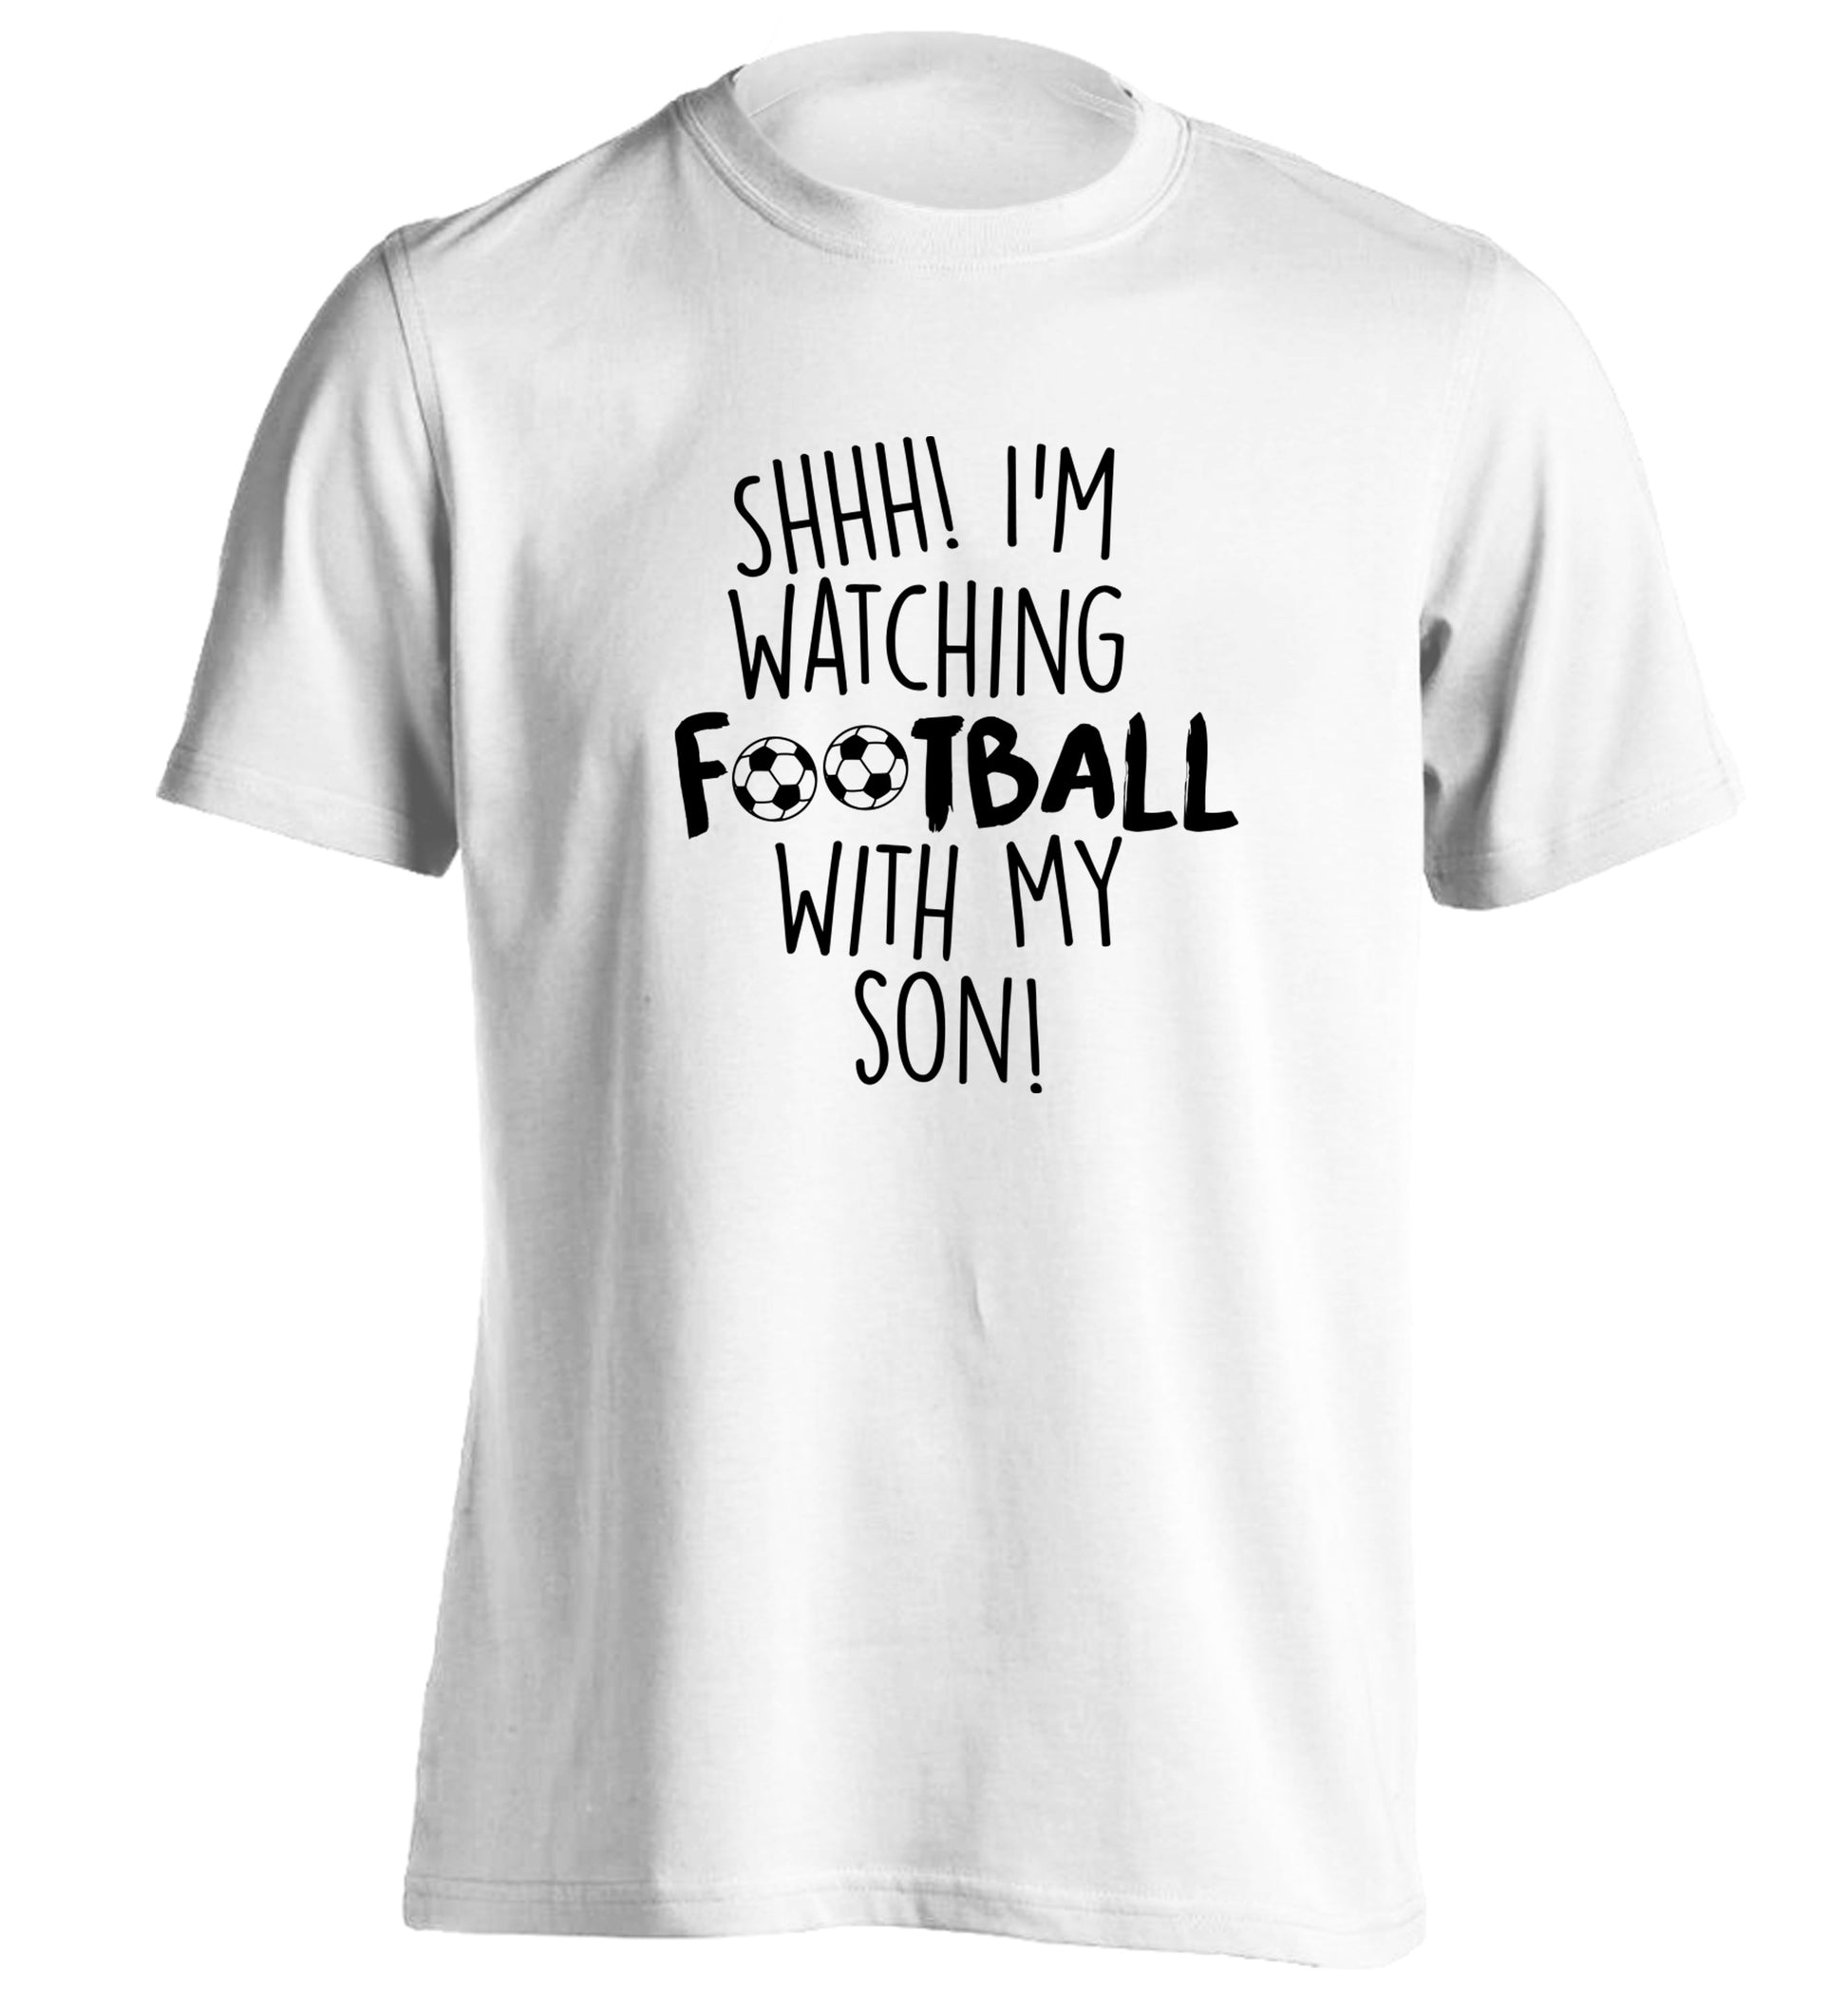 Shhh I'm watching football with my son adults unisexwhite Tshirt 2XL